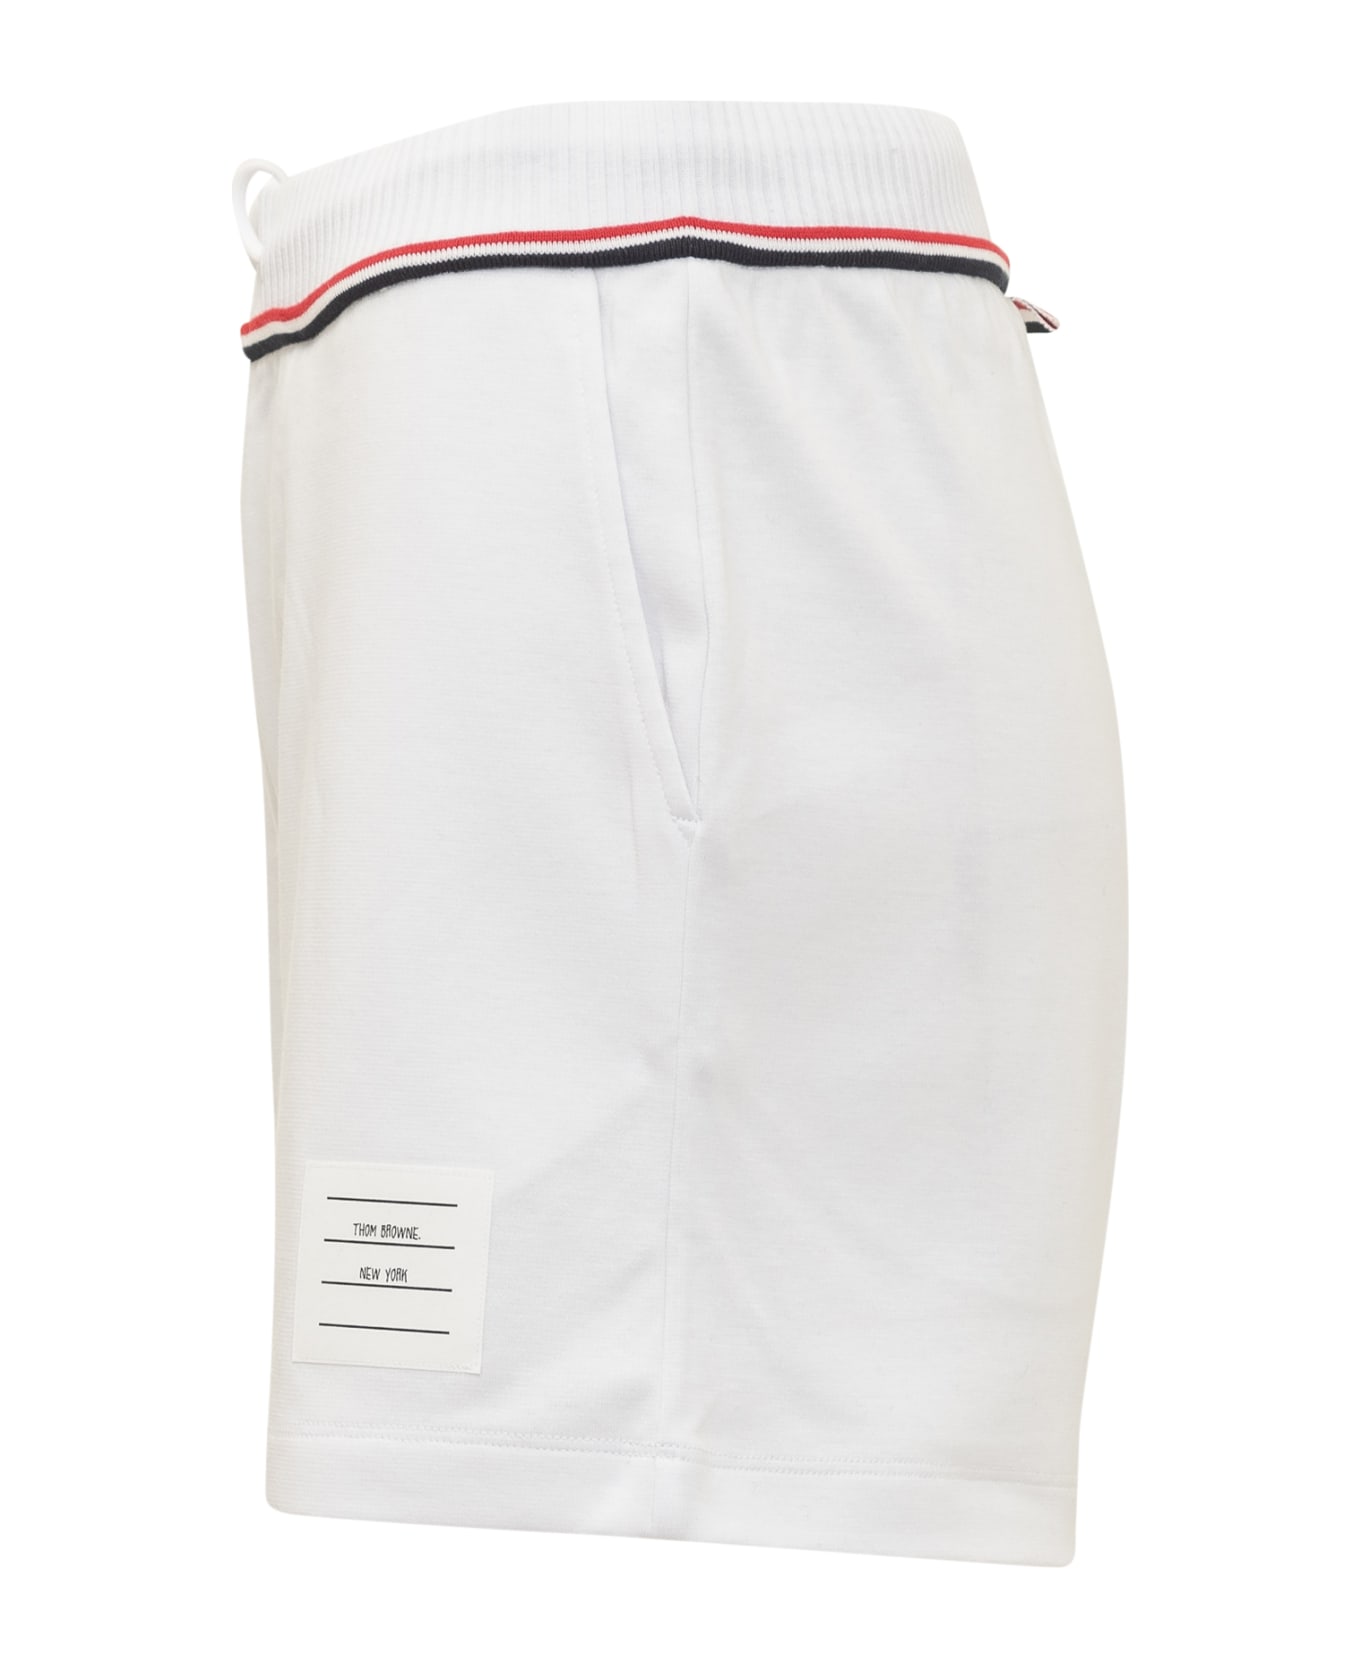 Thom Browne Sweat Shorts - WHITE